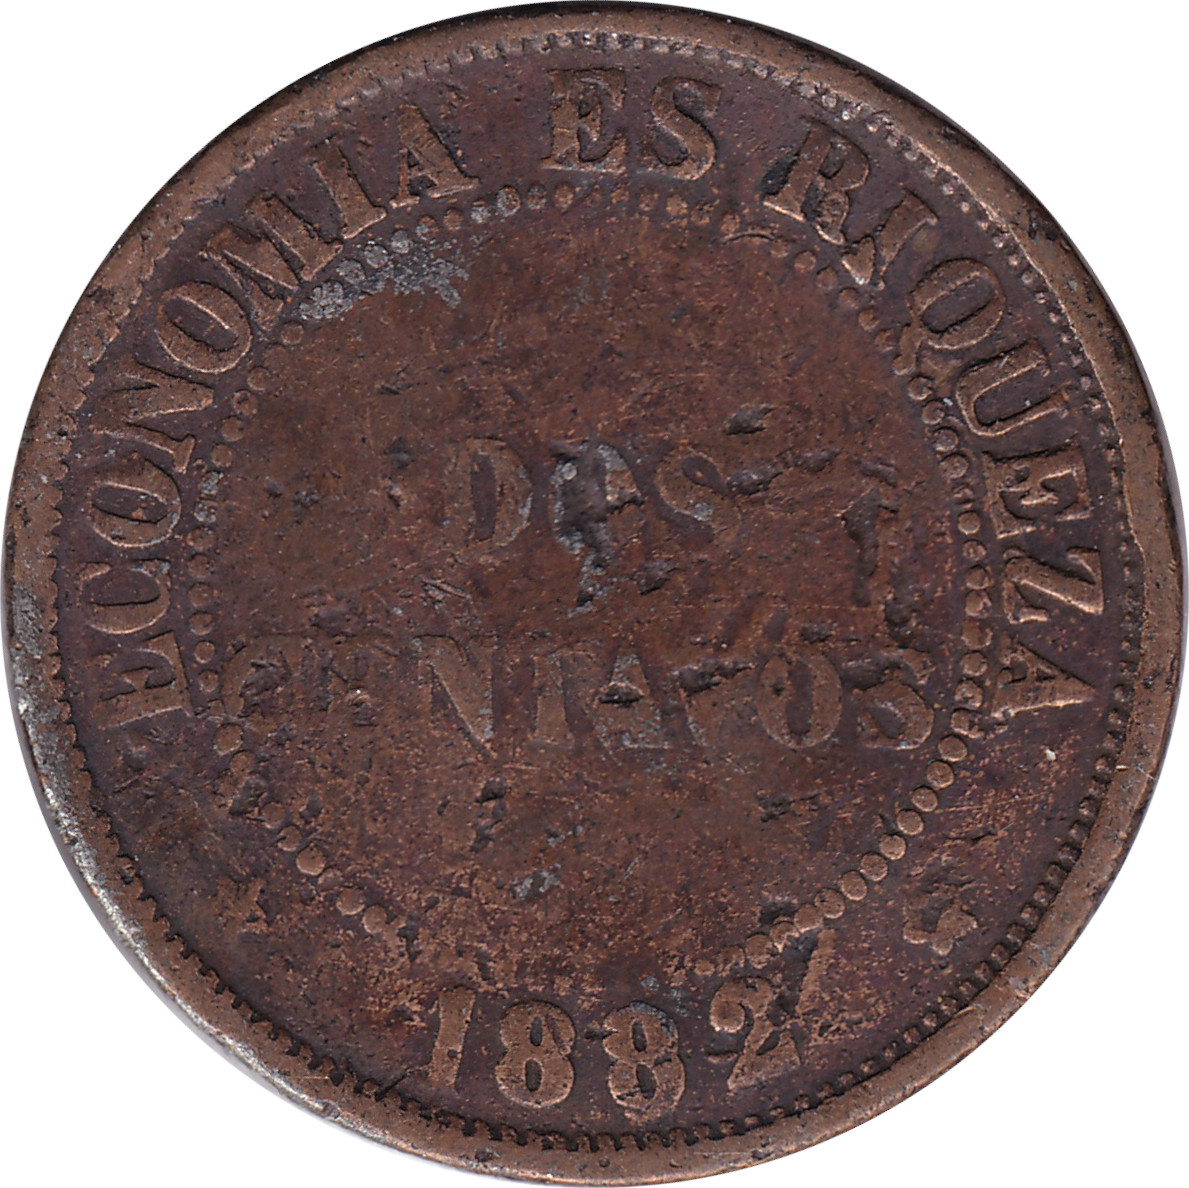 2 centavos - Liberty - Copper